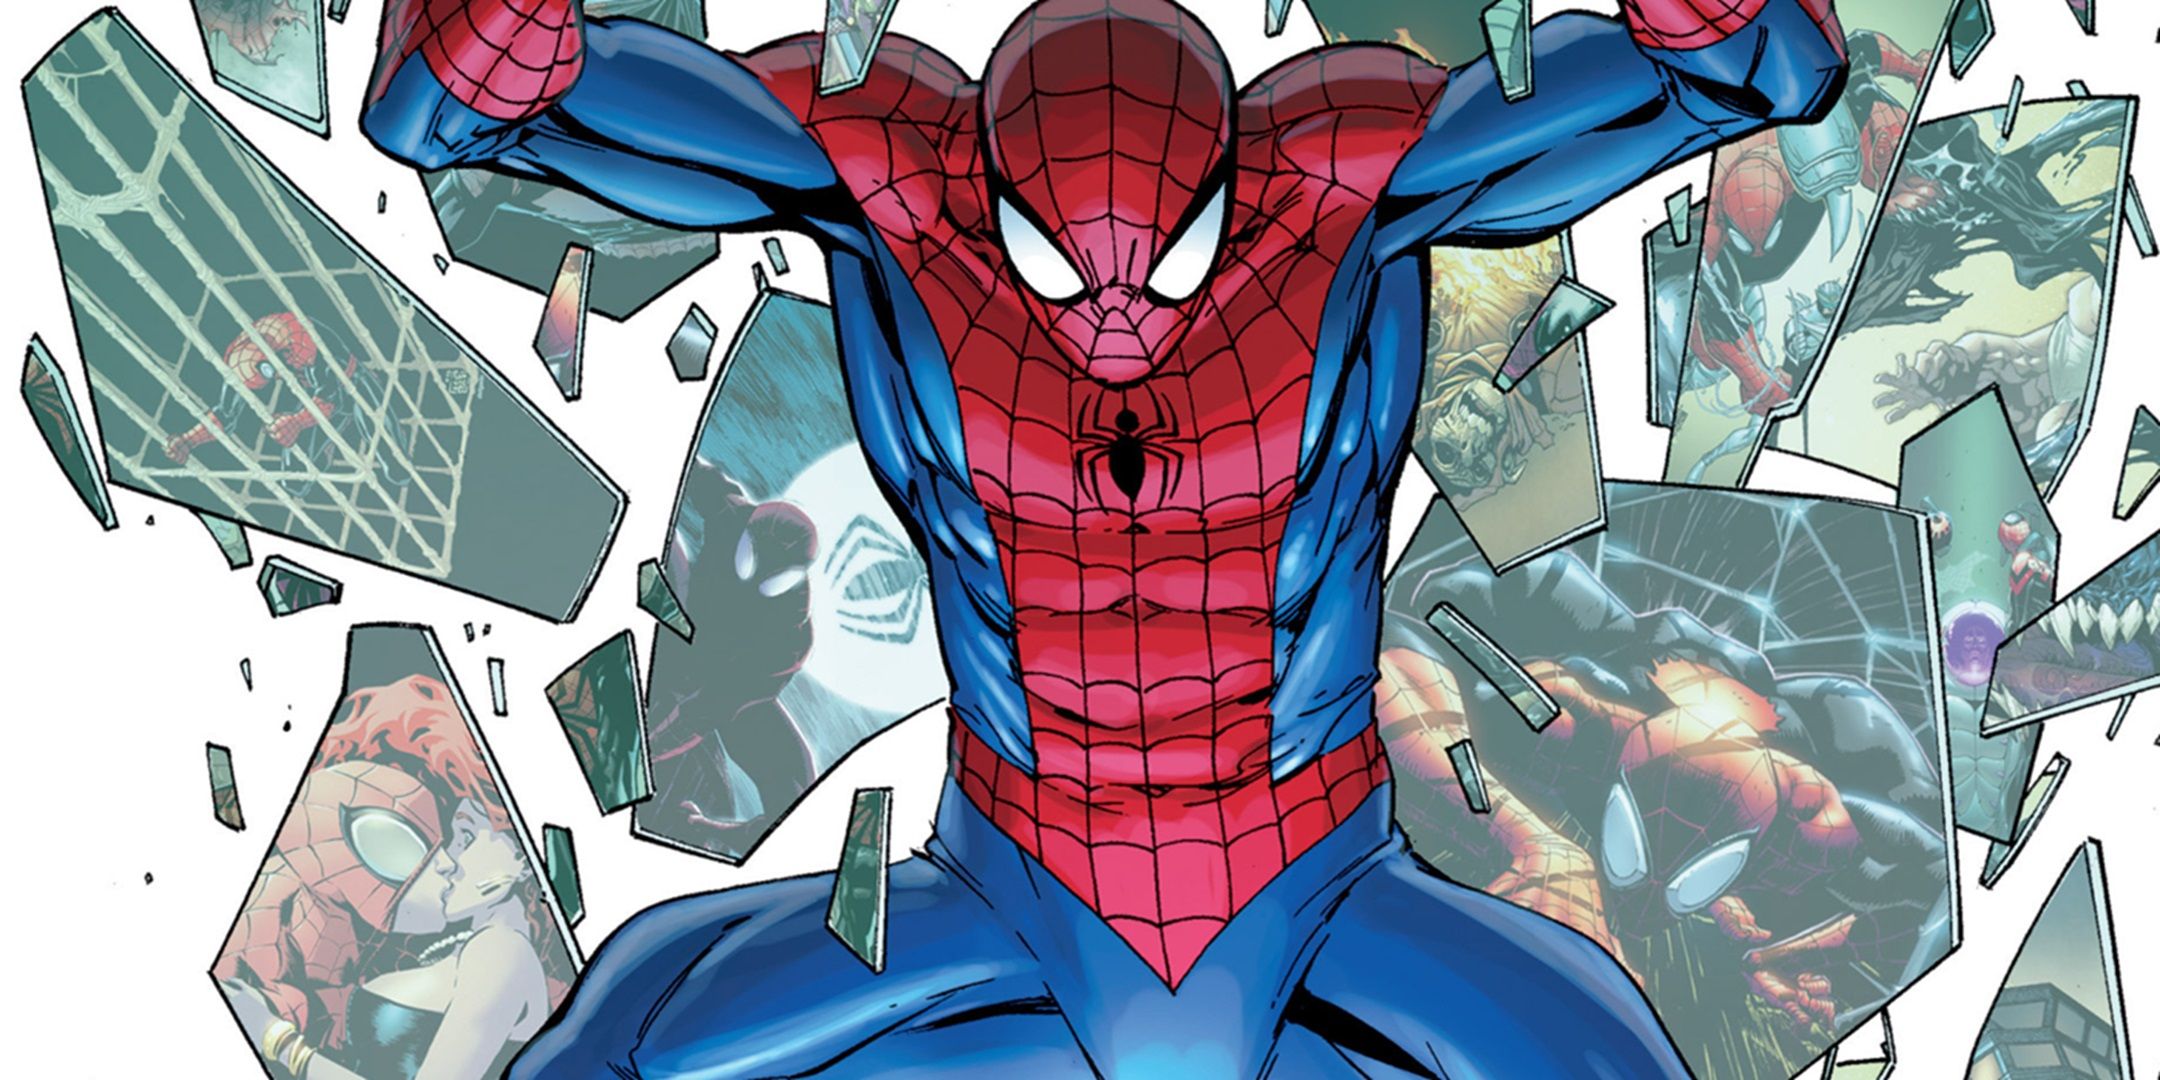 Peter powraca jako Spider-Man